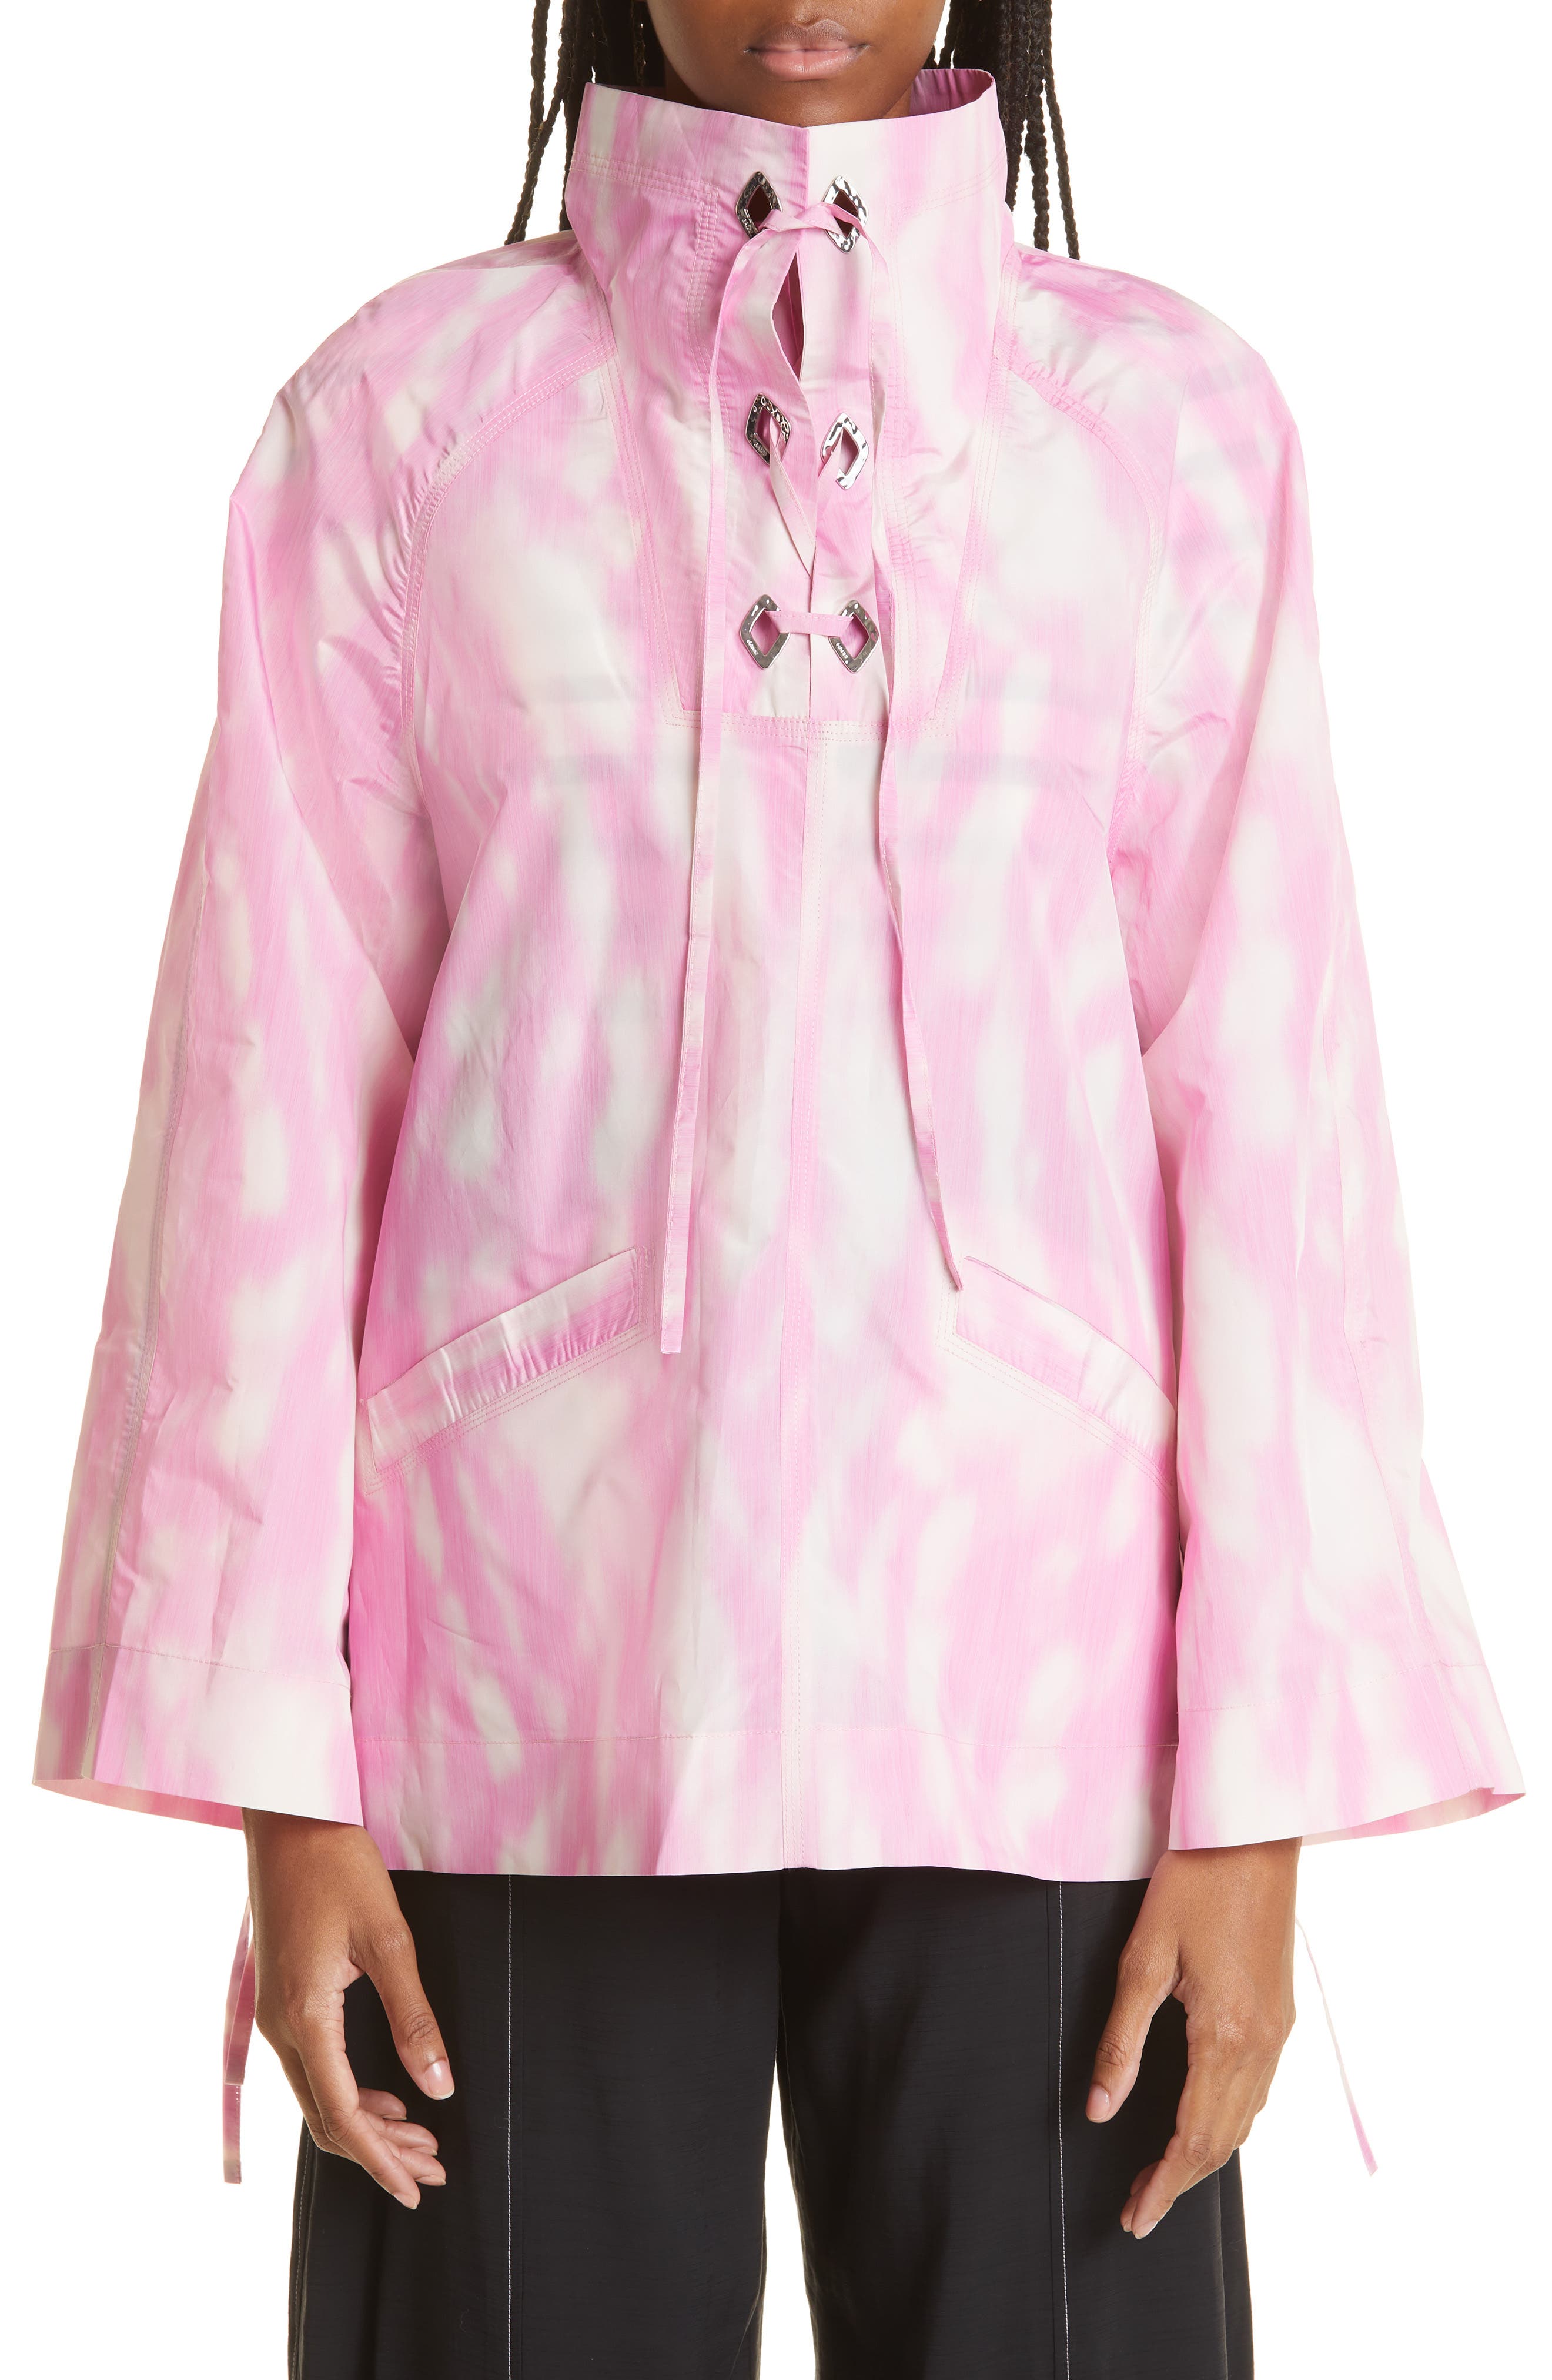 Crispy Shell Oversize Anorak in Dreamy Daze Phlox Pink at Nordstrom Nordstrom Women Clothing Jackets Anoraks 